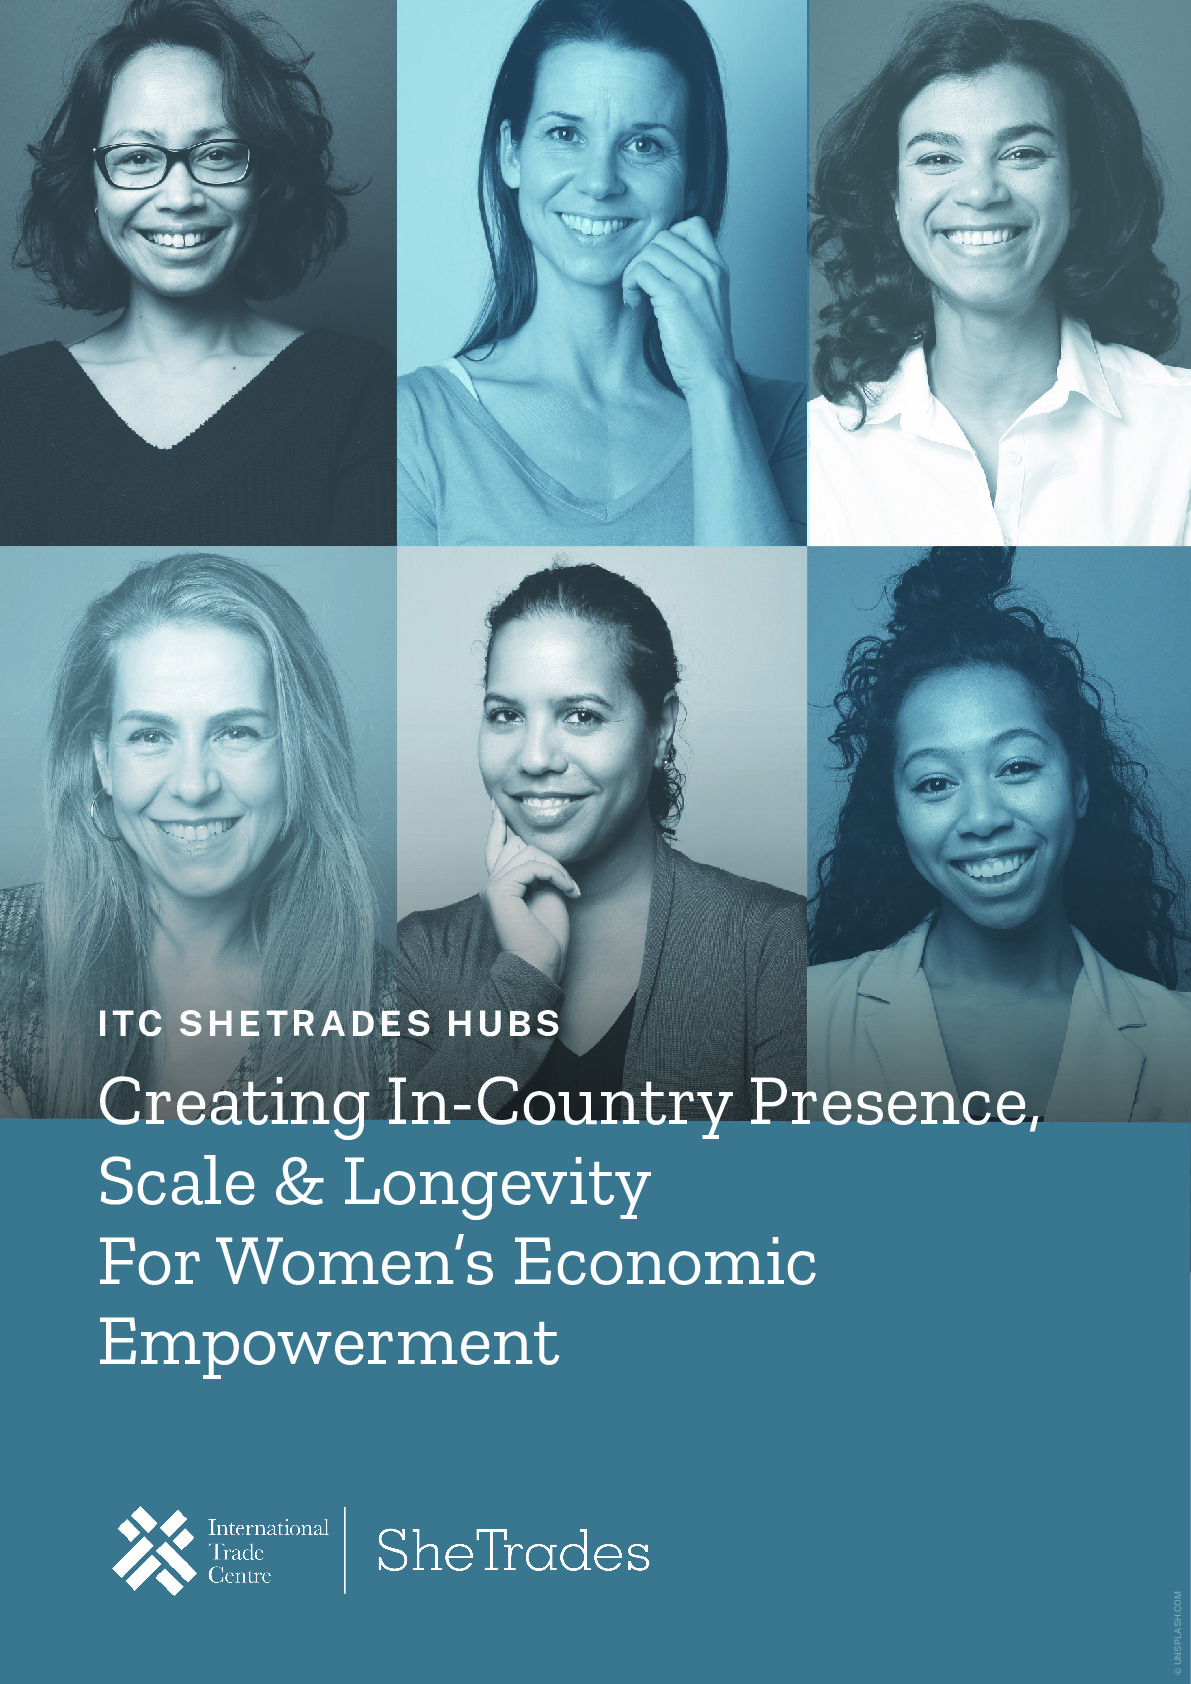 digital_shetrades_hubs_womens_economic_empowerment_brochure